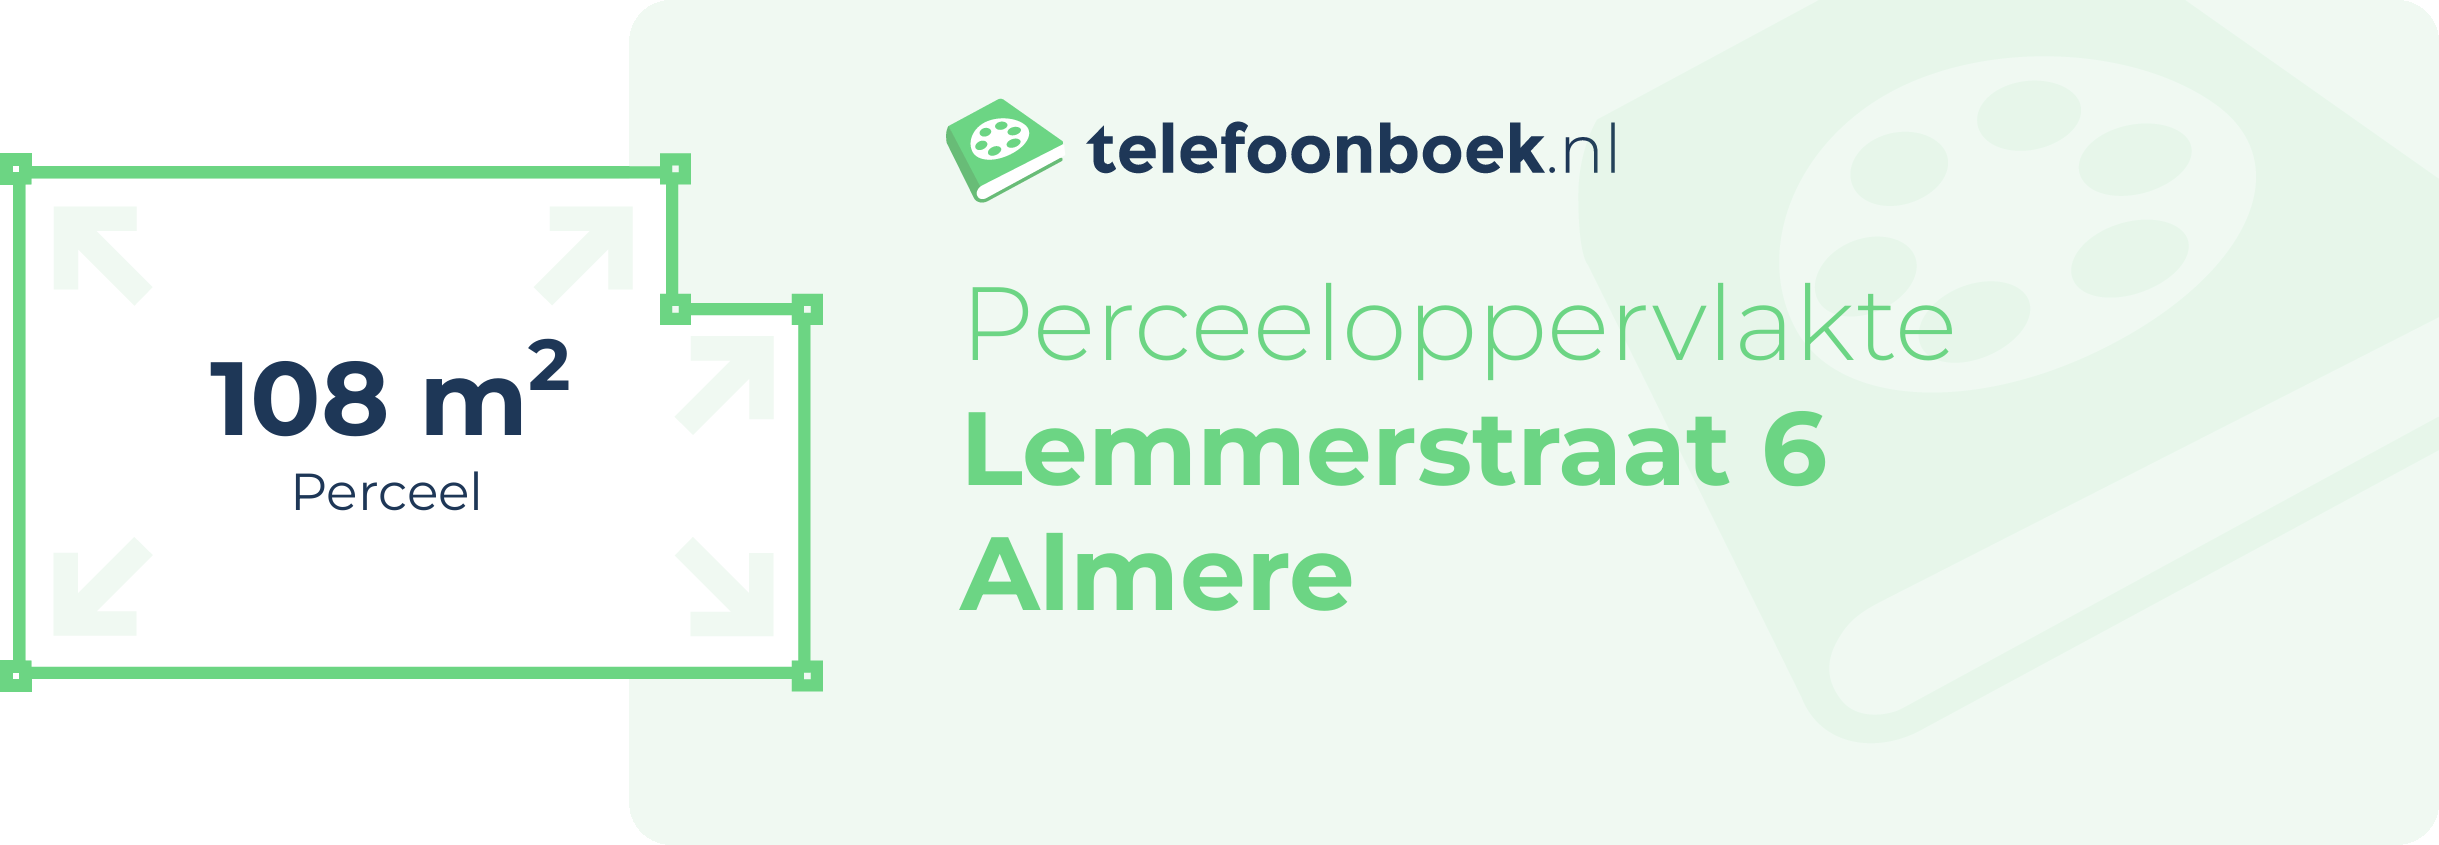 Perceeloppervlakte Lemmerstraat 6 Almere